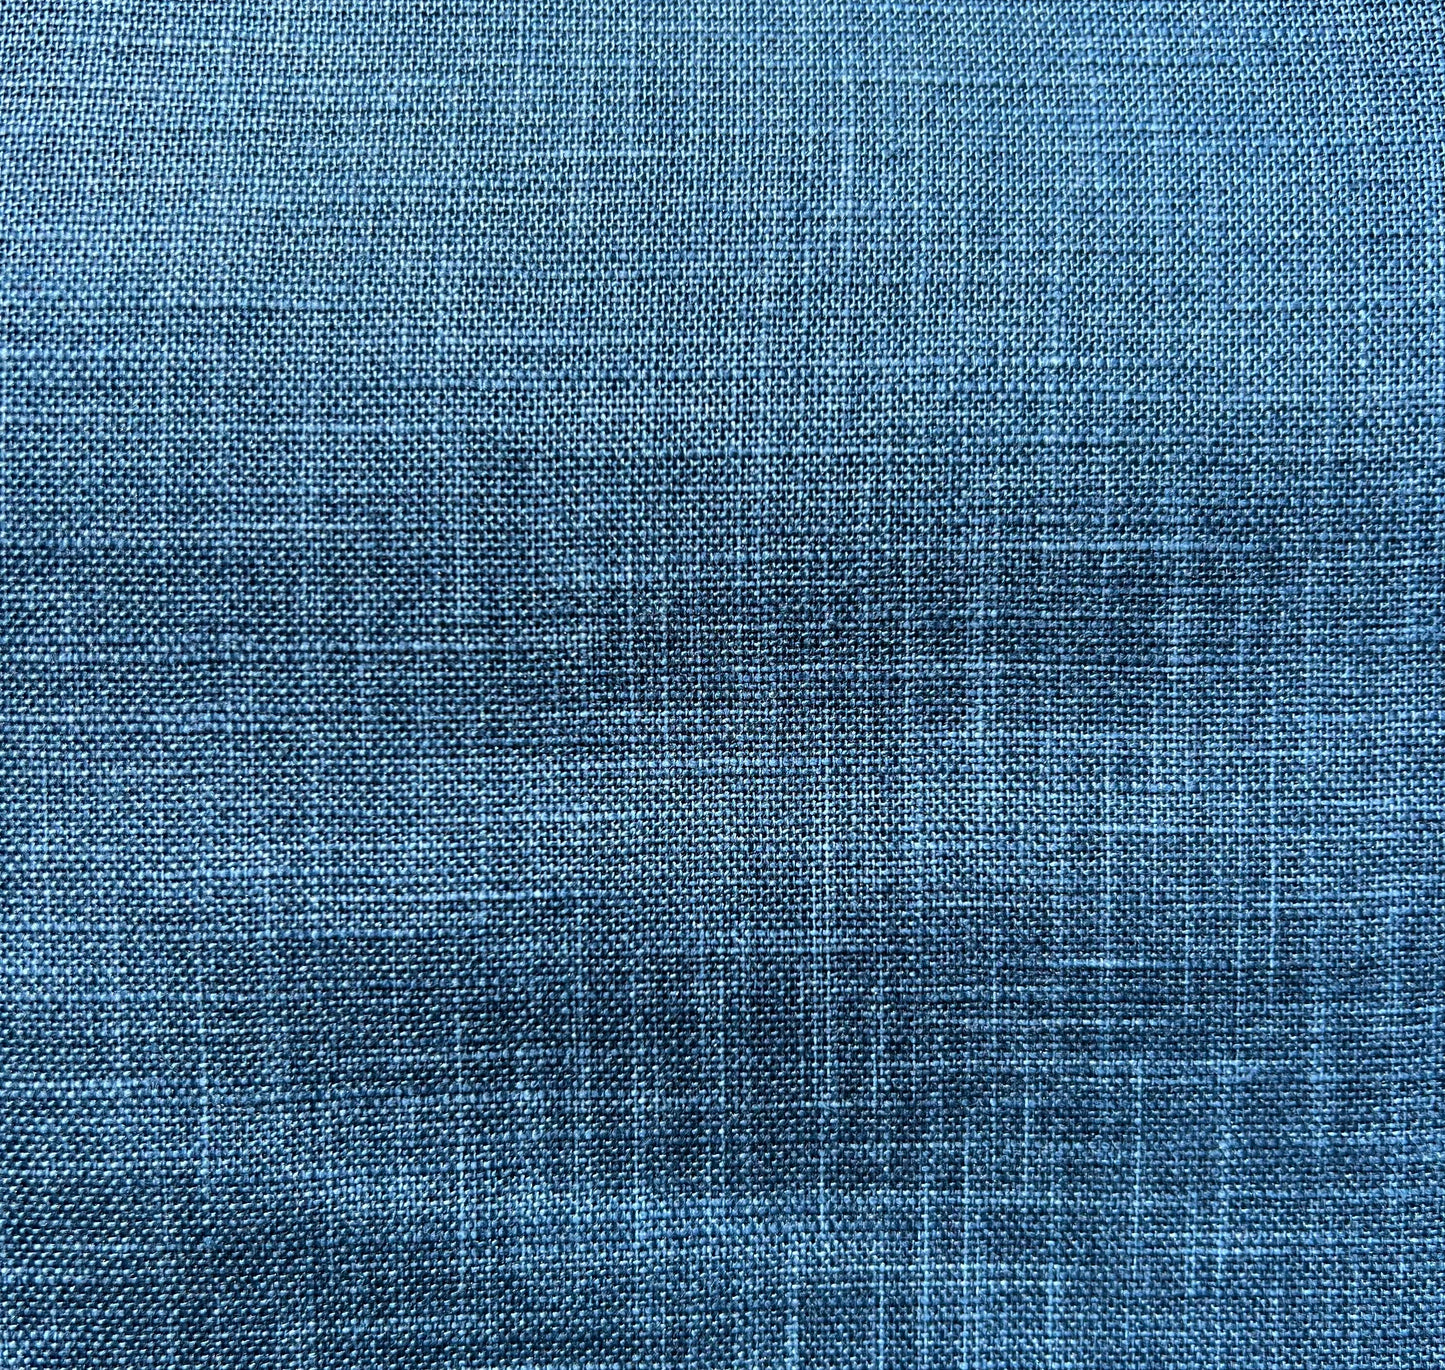 Handmade Cotton Futon w/Removable Mura Blue Cover. Shiki Futon.